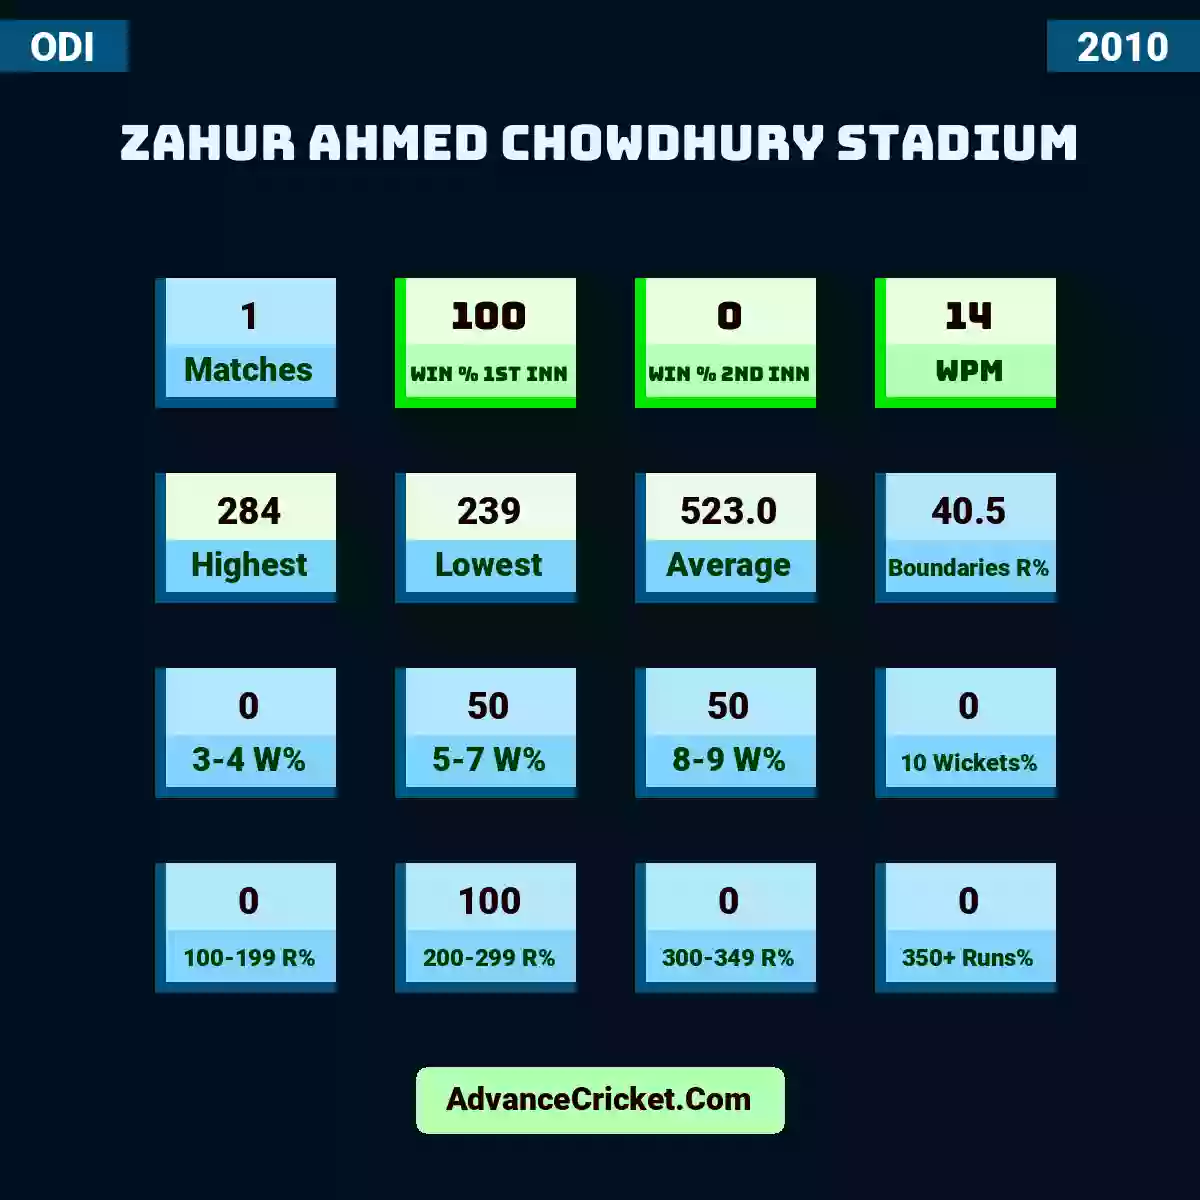 Image showing Zahur Ahmed Chowdhury Stadium with Matches: 1, Win % 1st Inn: 100, Win % 2nd Inn: 0, WPM: 14, Highest: 284, Lowest: 239, Average: 523.0, Boundaries R%: 40.5, 3-4 W%: 0, 5-7 W%: 50, 8-9 W%: 50, 10 Wickets%: 0, 100-199 R%: 0, 200-299 R%: 100, 300-349 R%: 0, 350+ Runs%: 0.